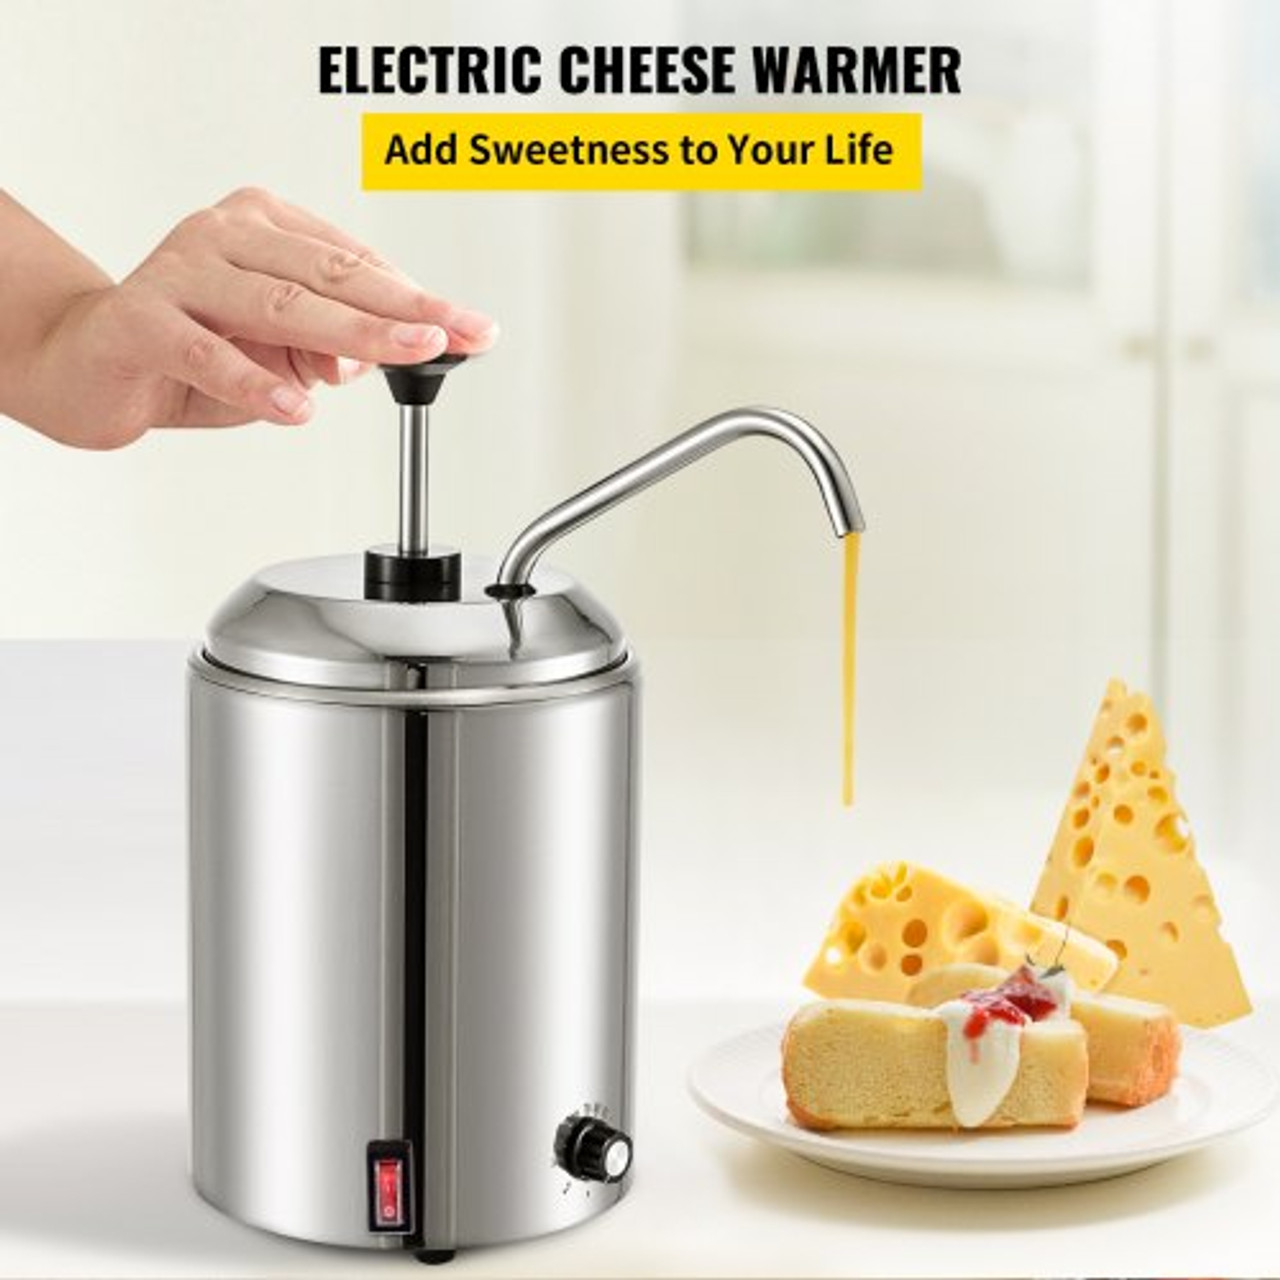 Cheese Dispenser with Pump 2.64 Qt Capacity Hot Fudge Warmer with Pump 110 V 650W Cheese Warmer Stainless Steel Cheese Dispenser with Pump 30-110? Temp Adjustable for Hot Fudge Cheese Caramel